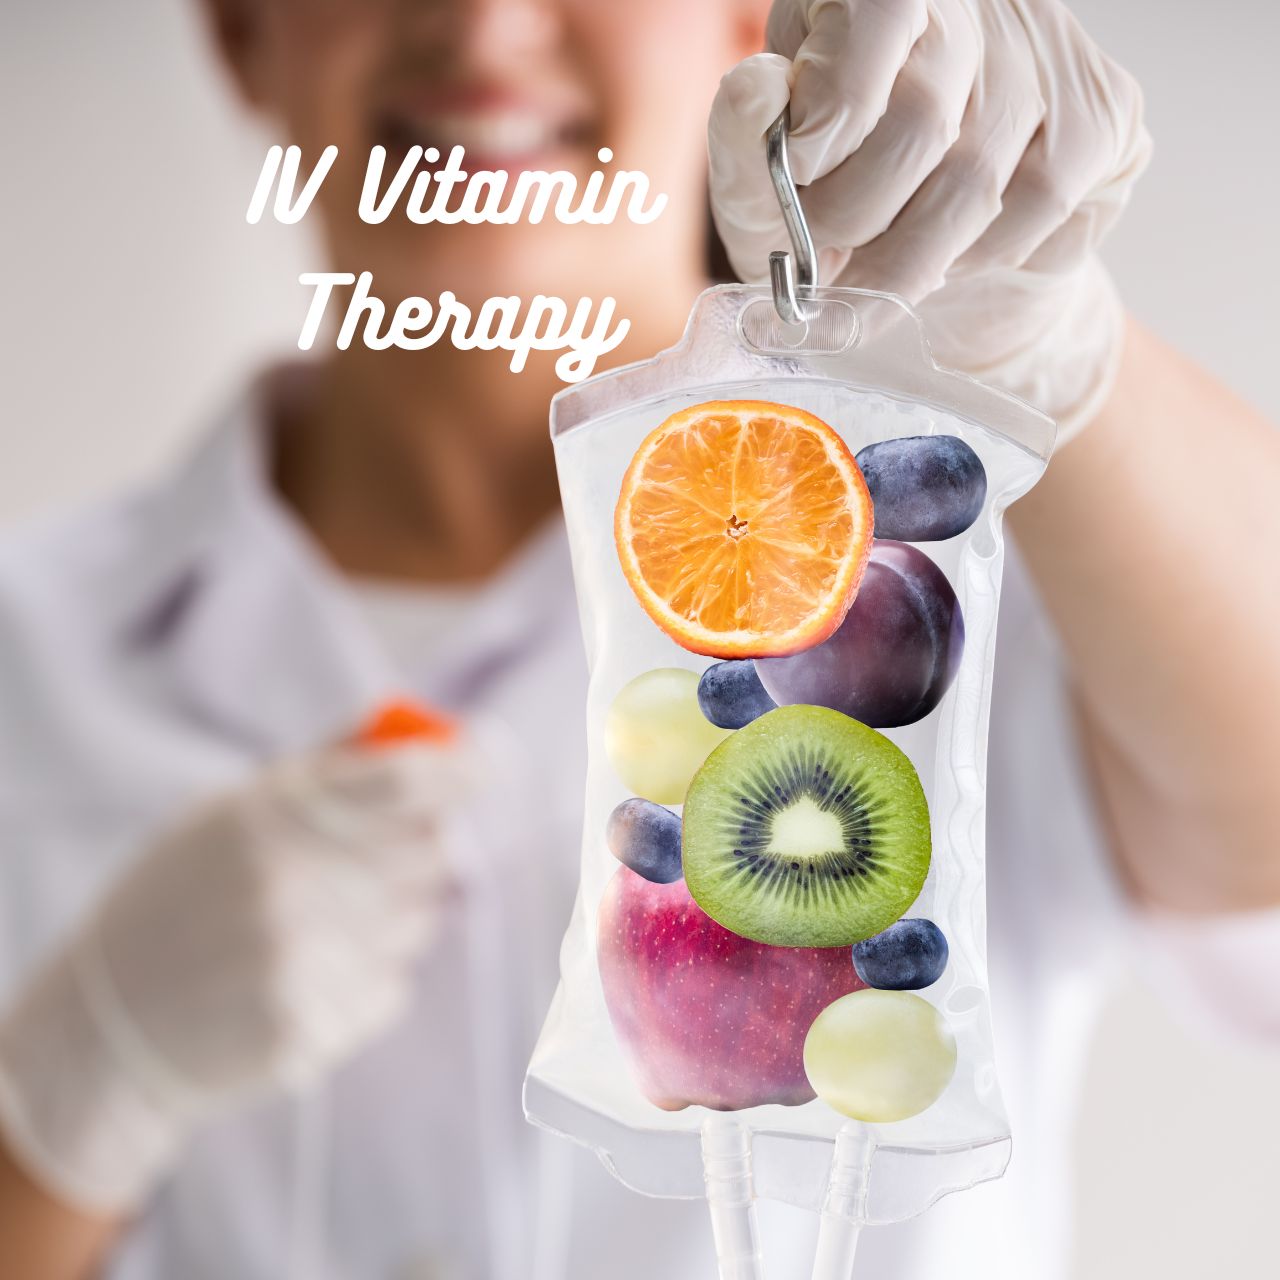 IV Vitamin Therapy